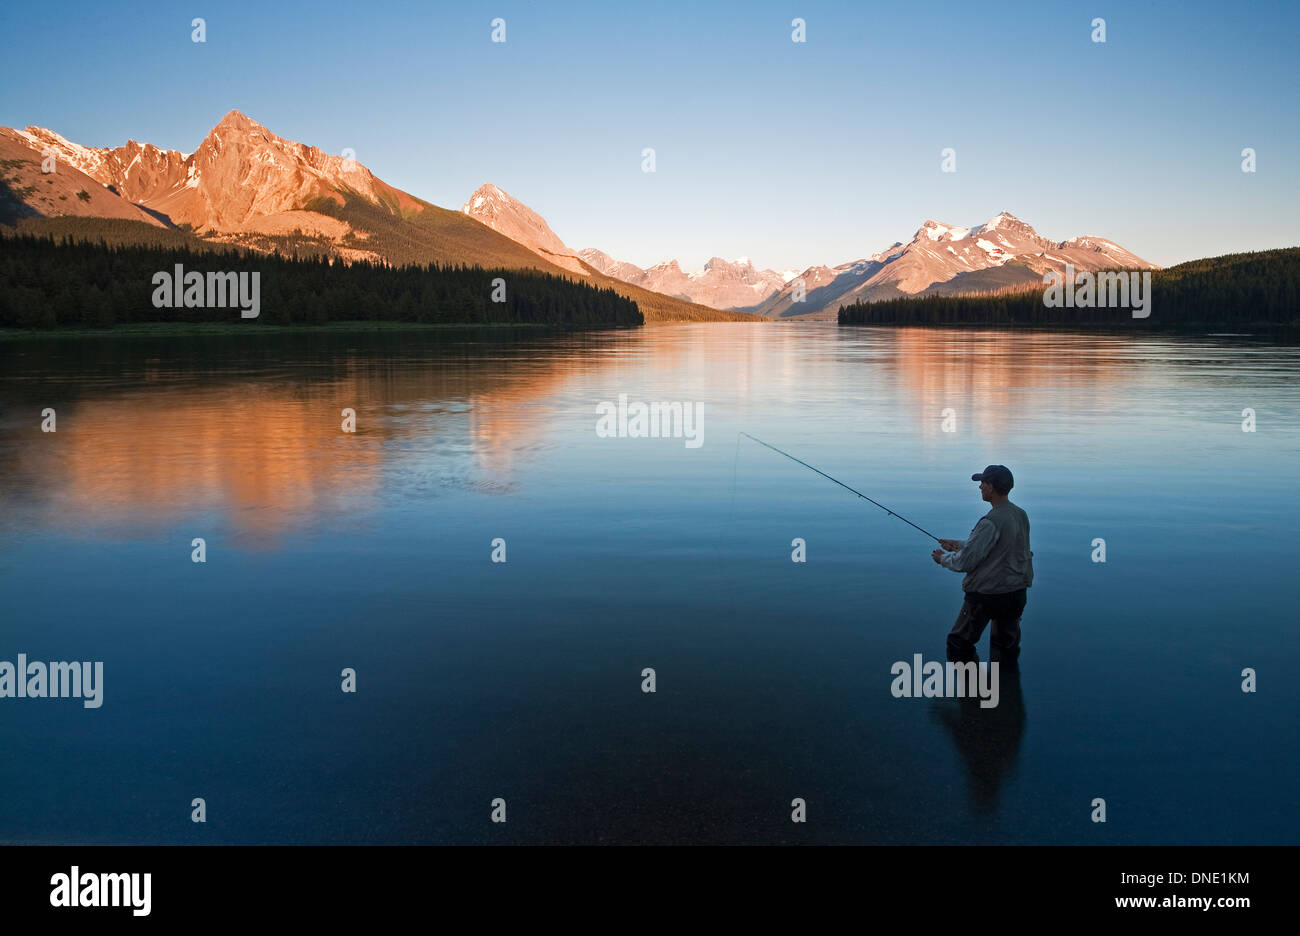 Metà maschio di età di Pesca a Mosca Report di Pesca sul Lago Maligne, Jasper National Park, Alberta, Canada. Foto Stock